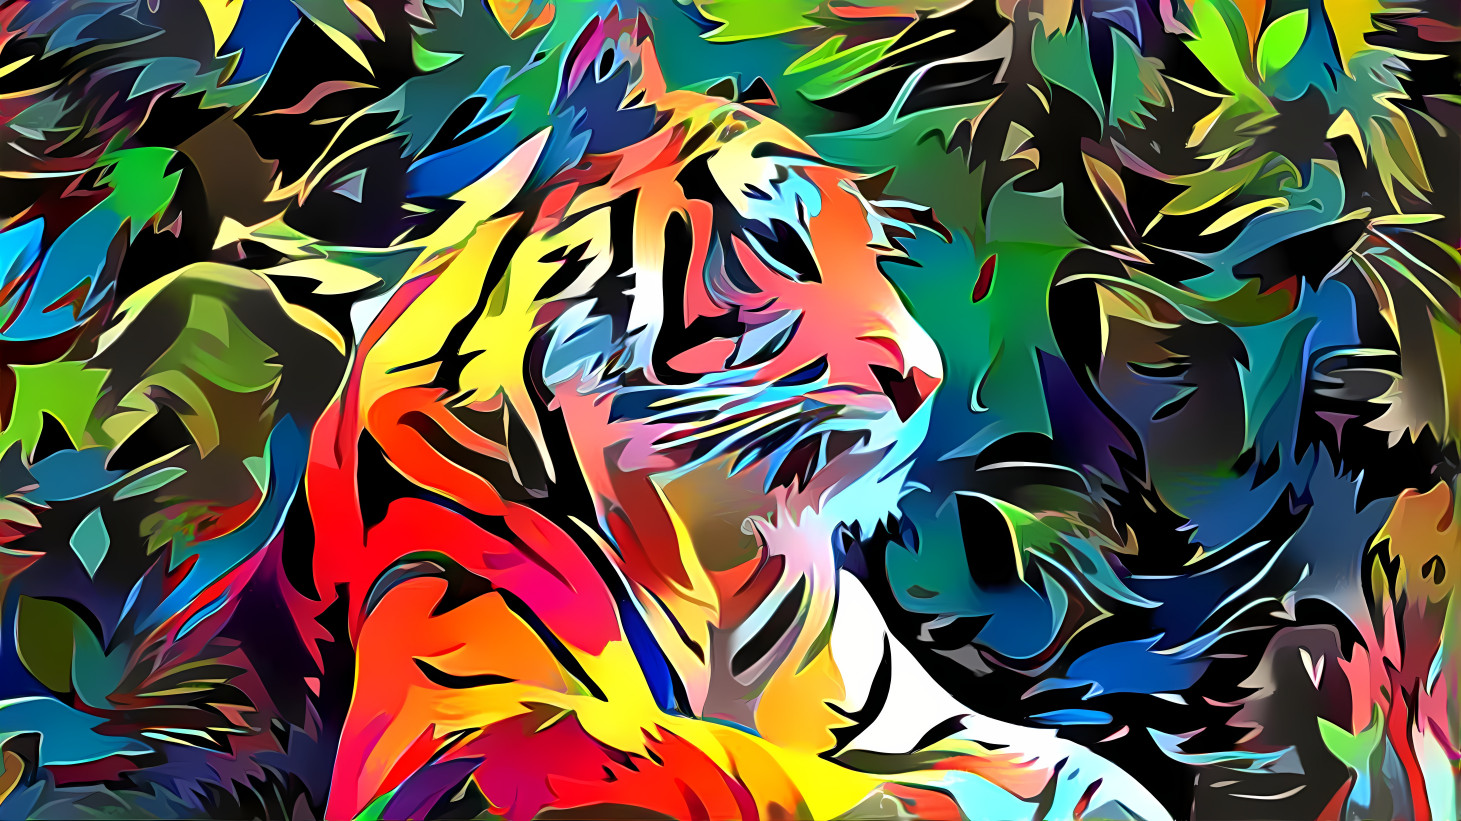 Tigre painting guapo